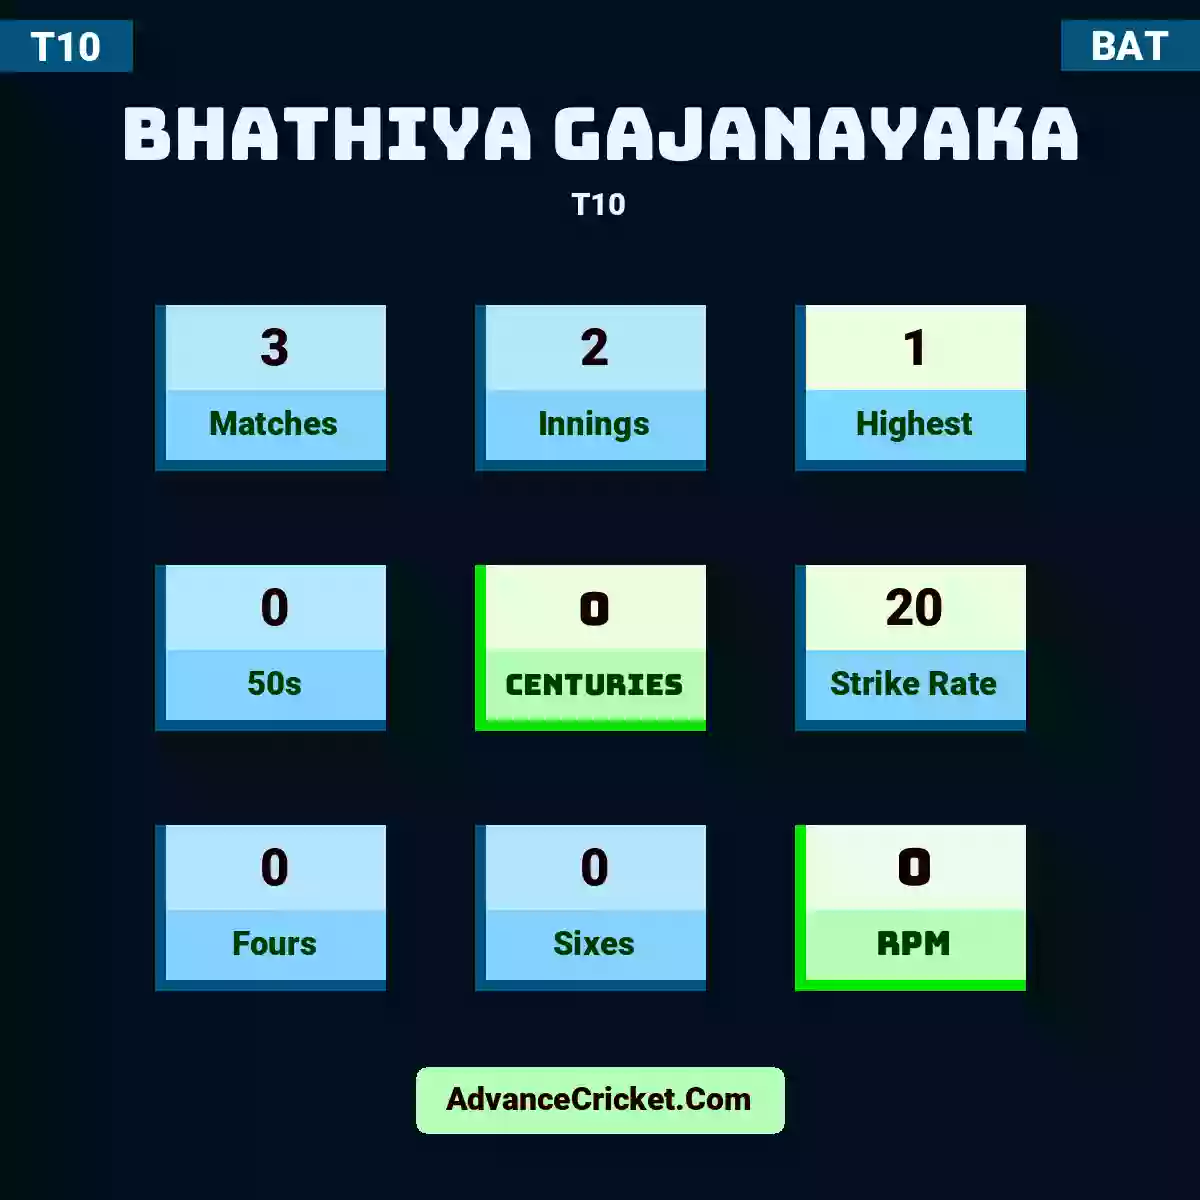 Bhathiya Gajanayaka T10 , Bhathiya Gajanayaka played 3 matches, scored 1 runs as highest, 0 half-centuries, and 0 centuries, with a strike rate of 20. B.Gajanayaka hit 0 fours and 0 sixes, with an RPM of 0.